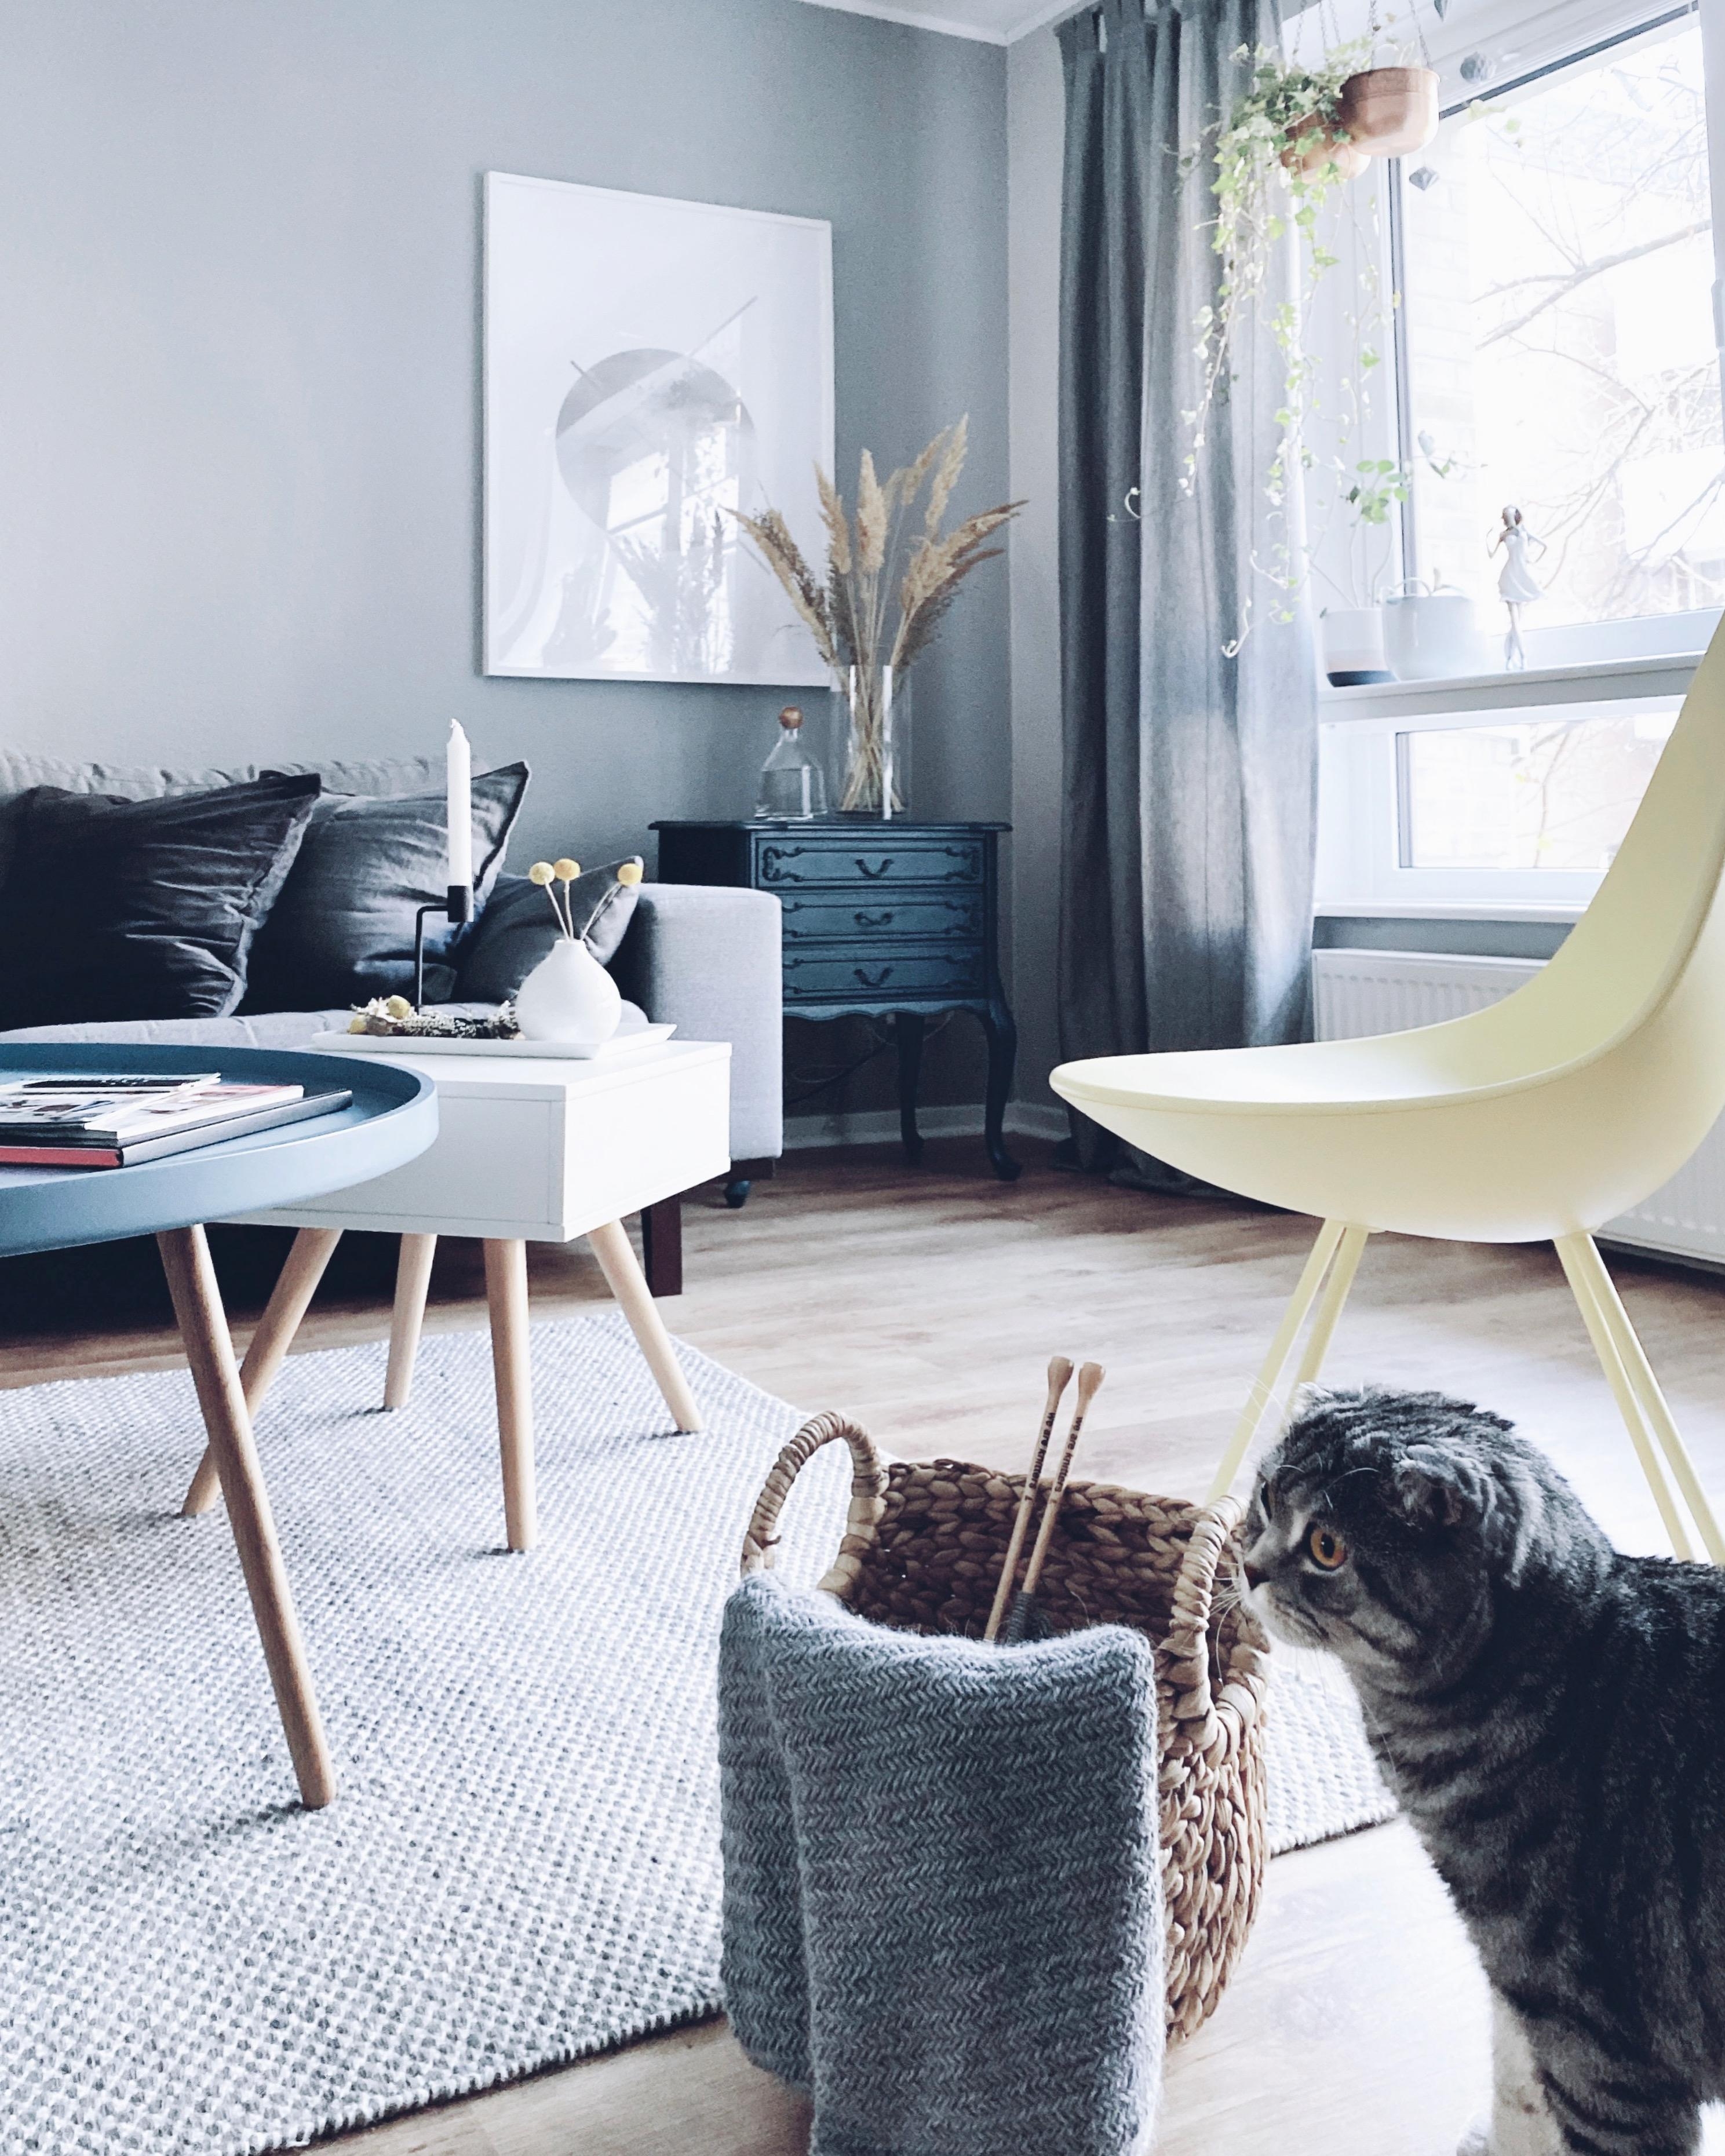 Cozyplace
#interior #nordicroom #nordichome #hygge #monochrome #scandinaviandesign #scandinavianliving #livingroom